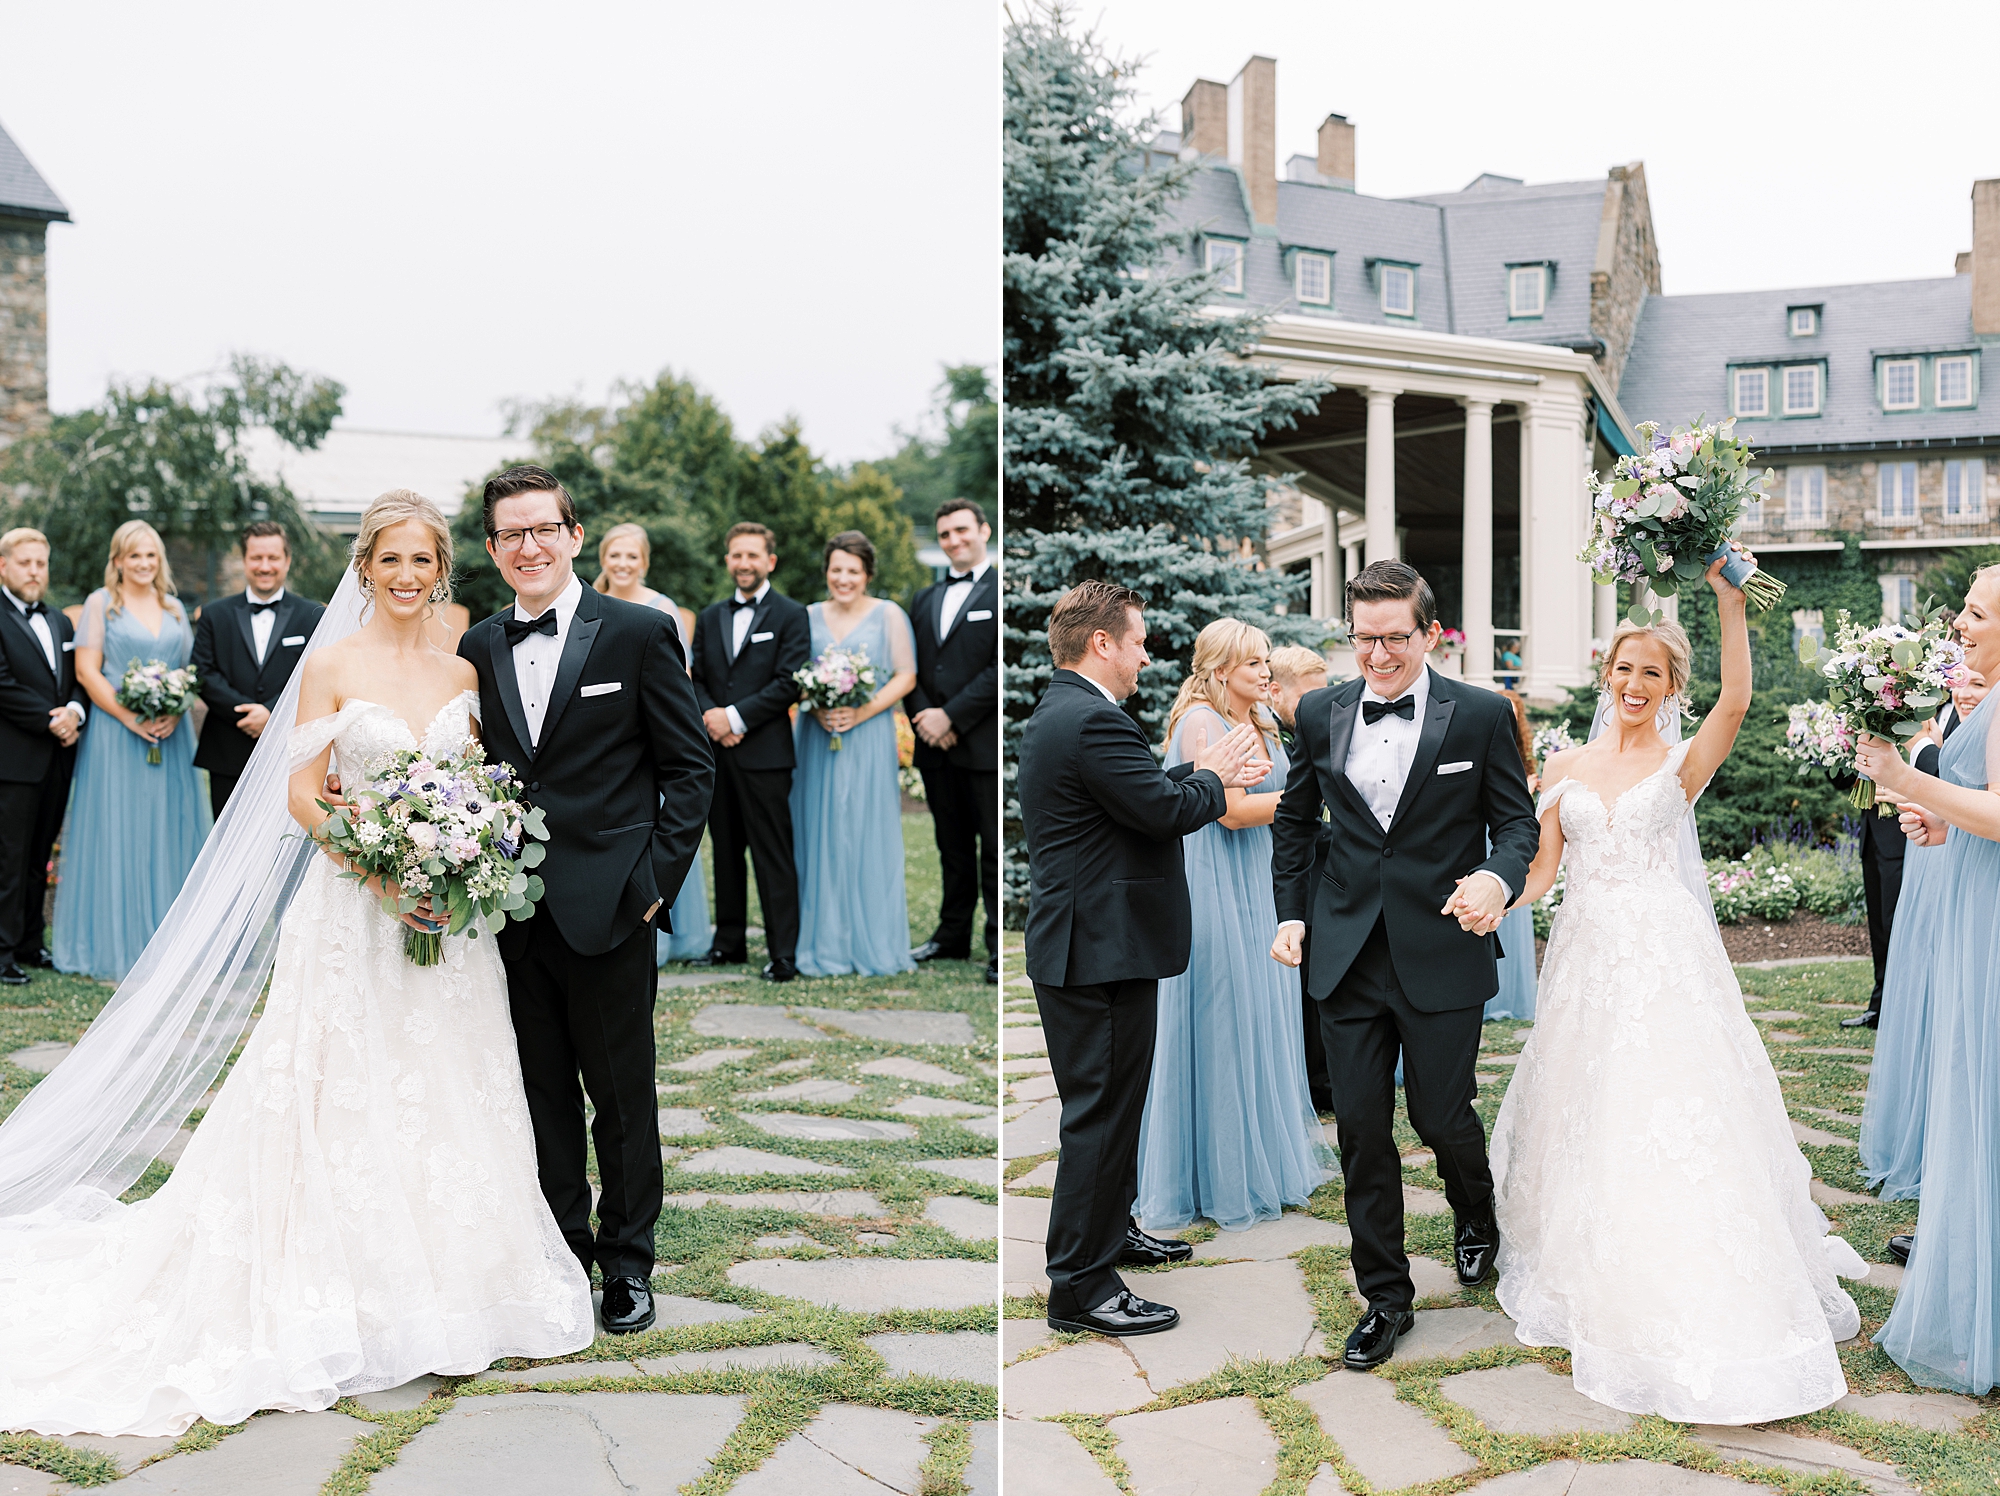 newlyweds cheer and walk between bridesmaids and groomsmen 